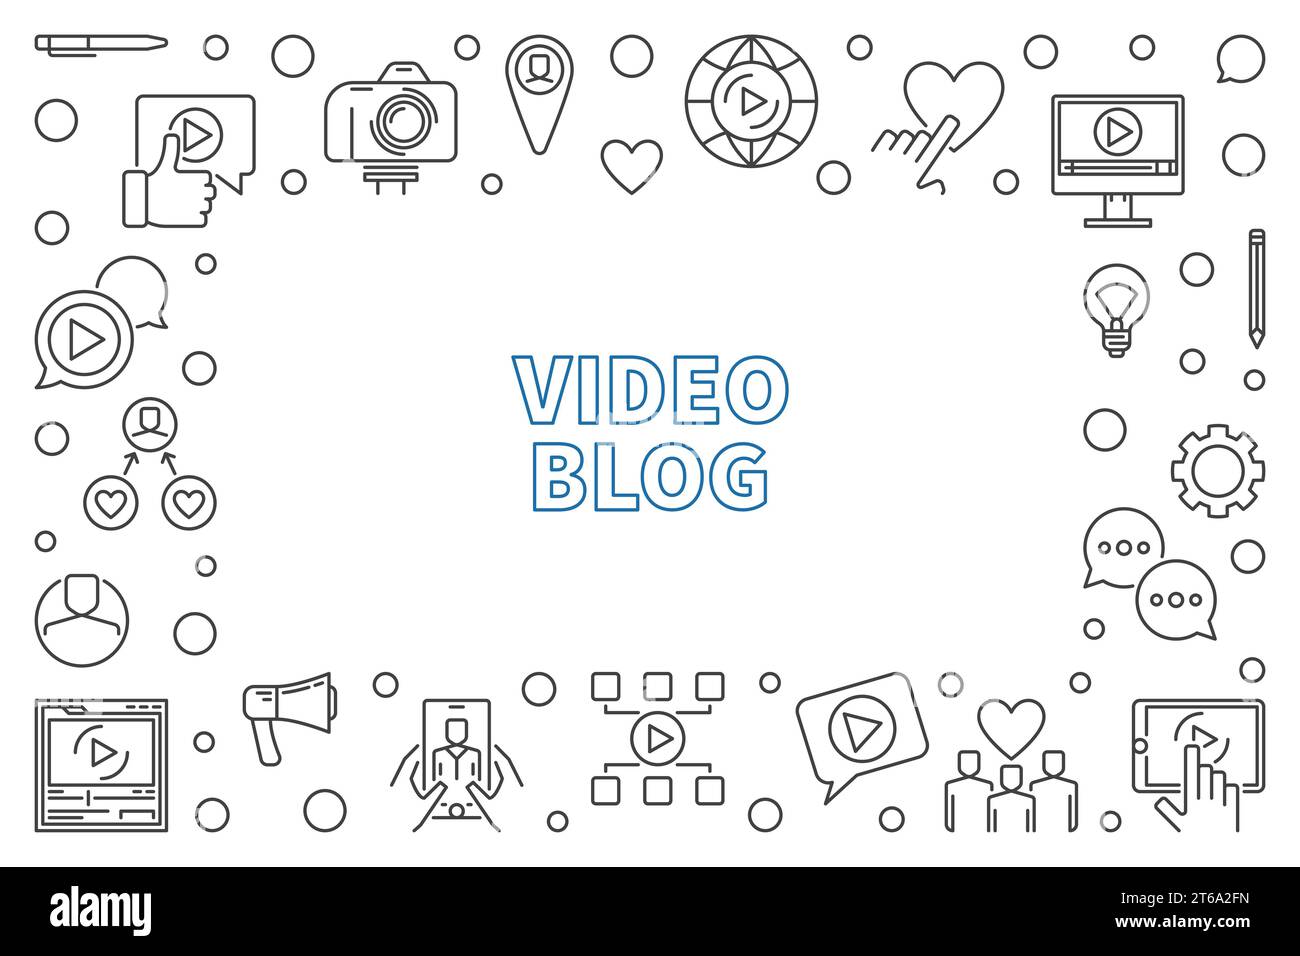 Video Blog vector concept outline illustration or horizontal frame Stock Vector